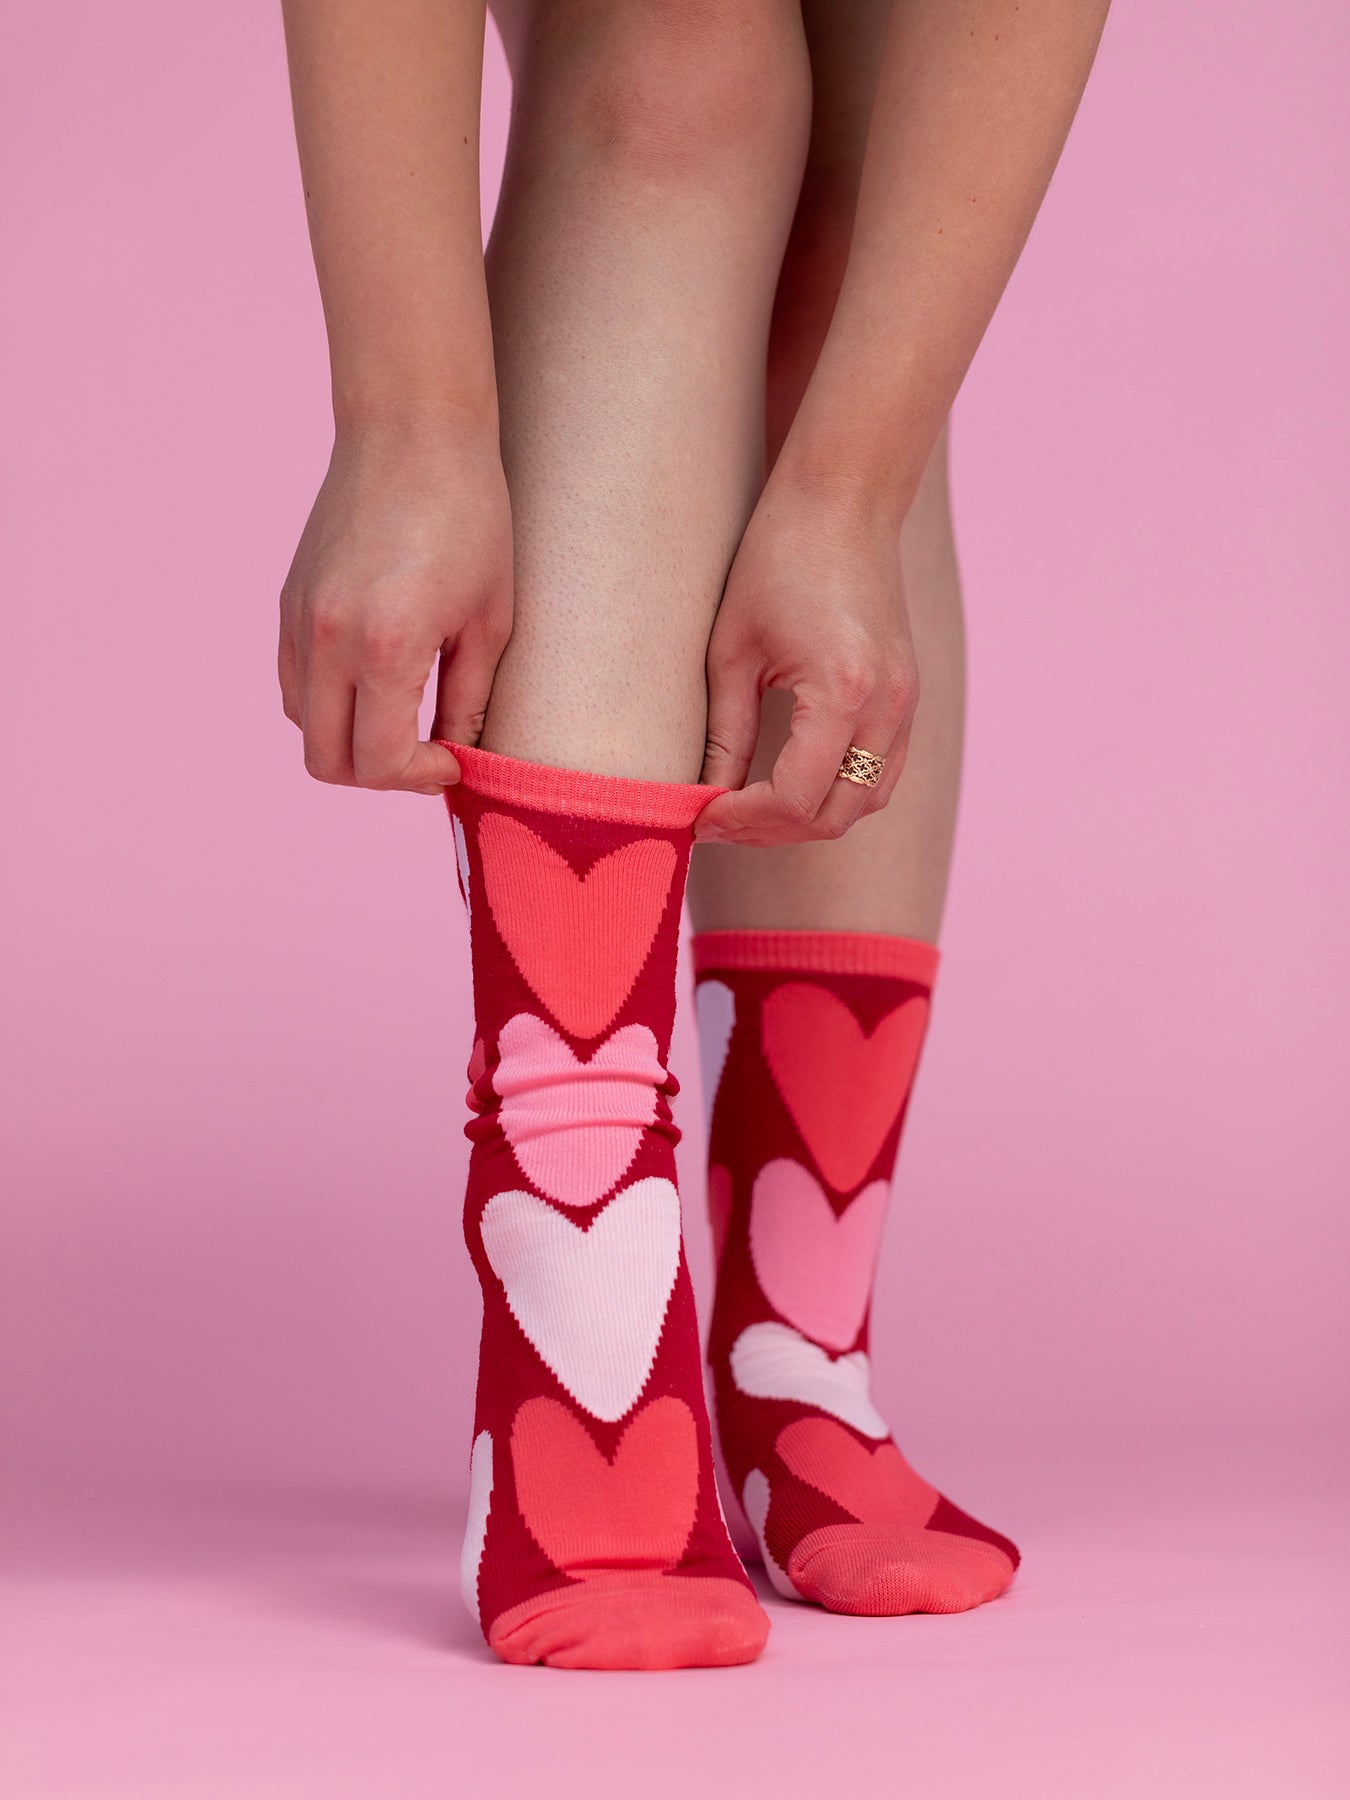 Tights & Socks – Lesley Evers